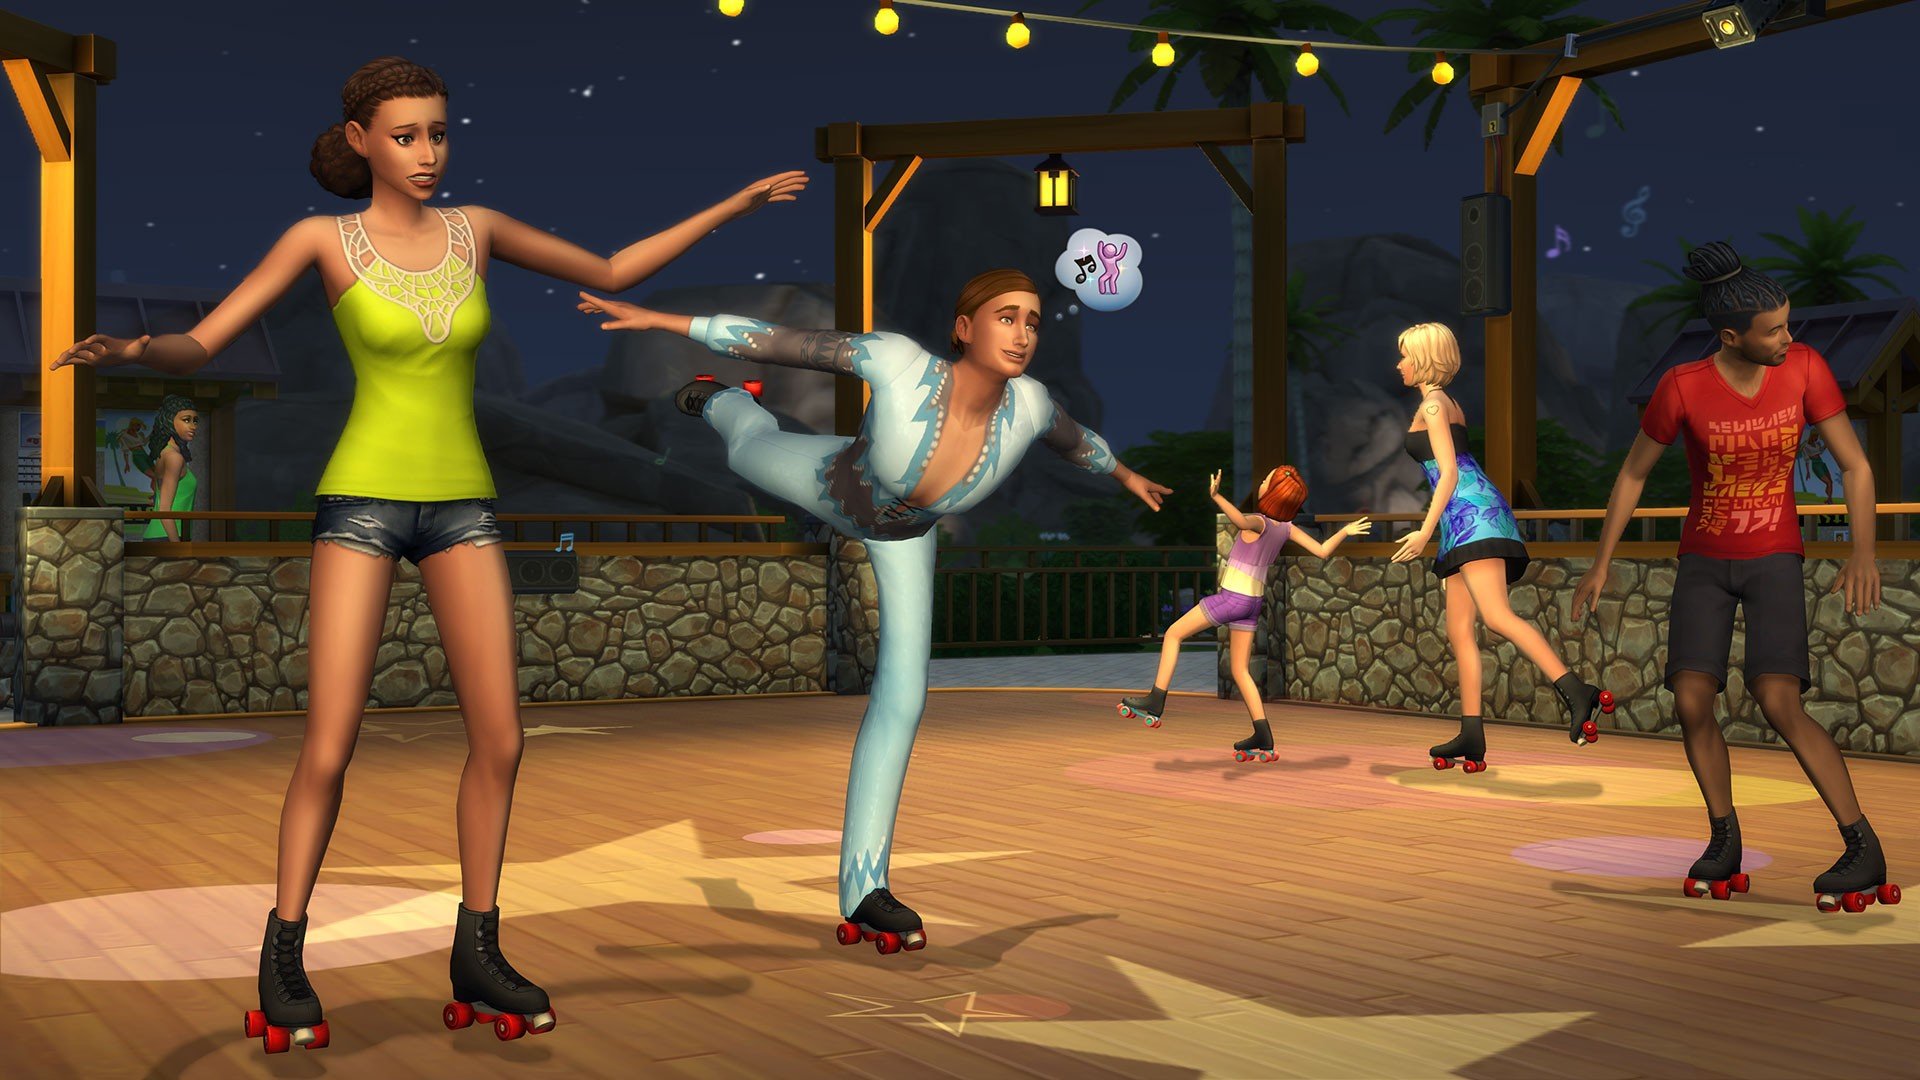 The Sims 4: Ročné obdobia CZ [Origin]